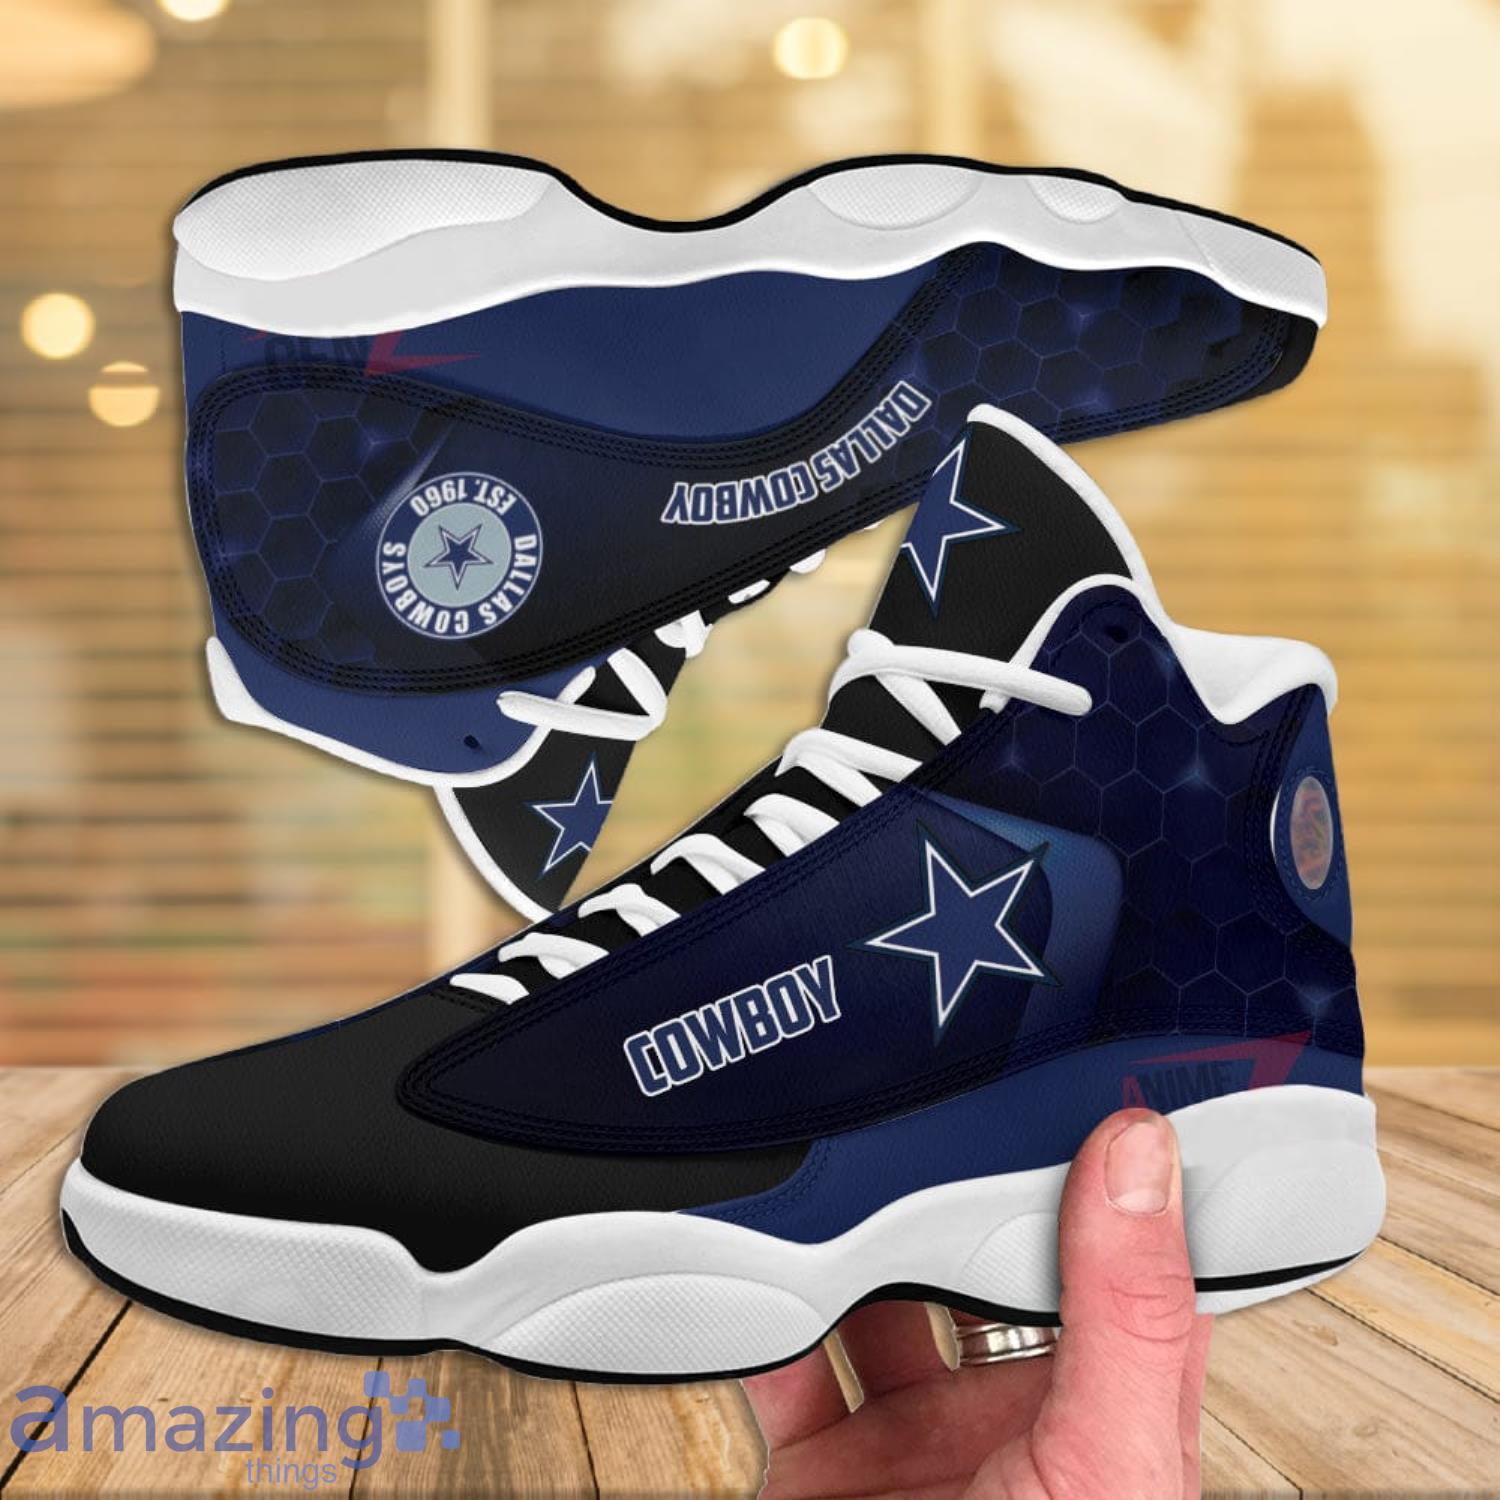 Personalized Nfl Dallas Cowboys White Air Jordan 13 Shoes - It's  RobinLoriNOW!